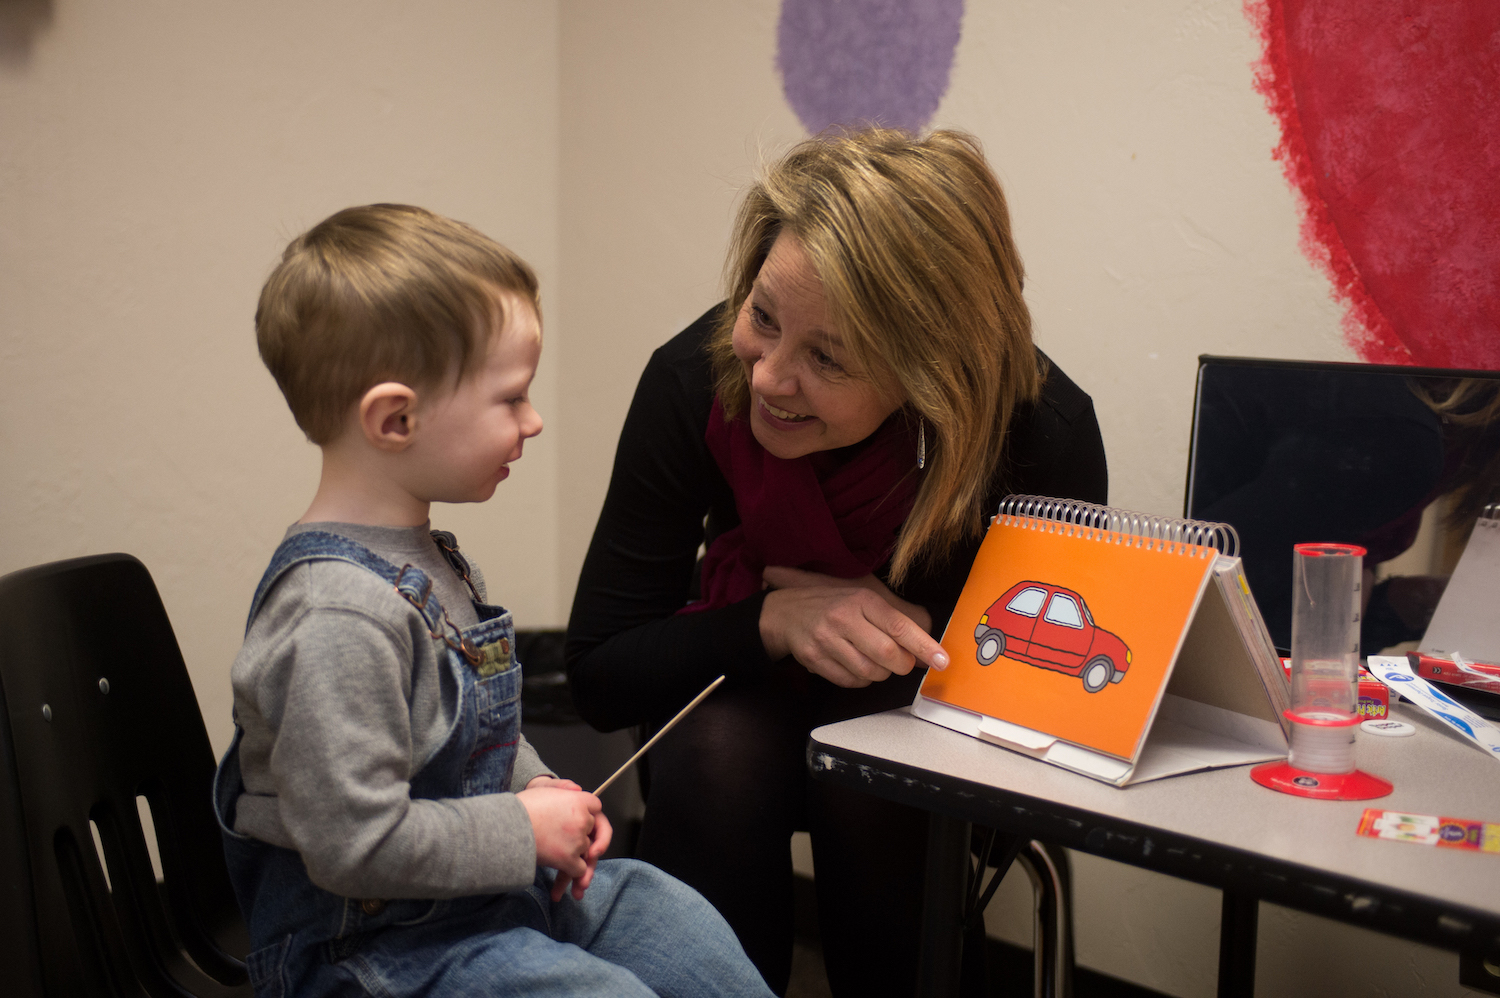 ISU speech language pathologist professor Wendy Morgan works with a child at ISU's Speech Language and Hearing Clinic in Pocatello.